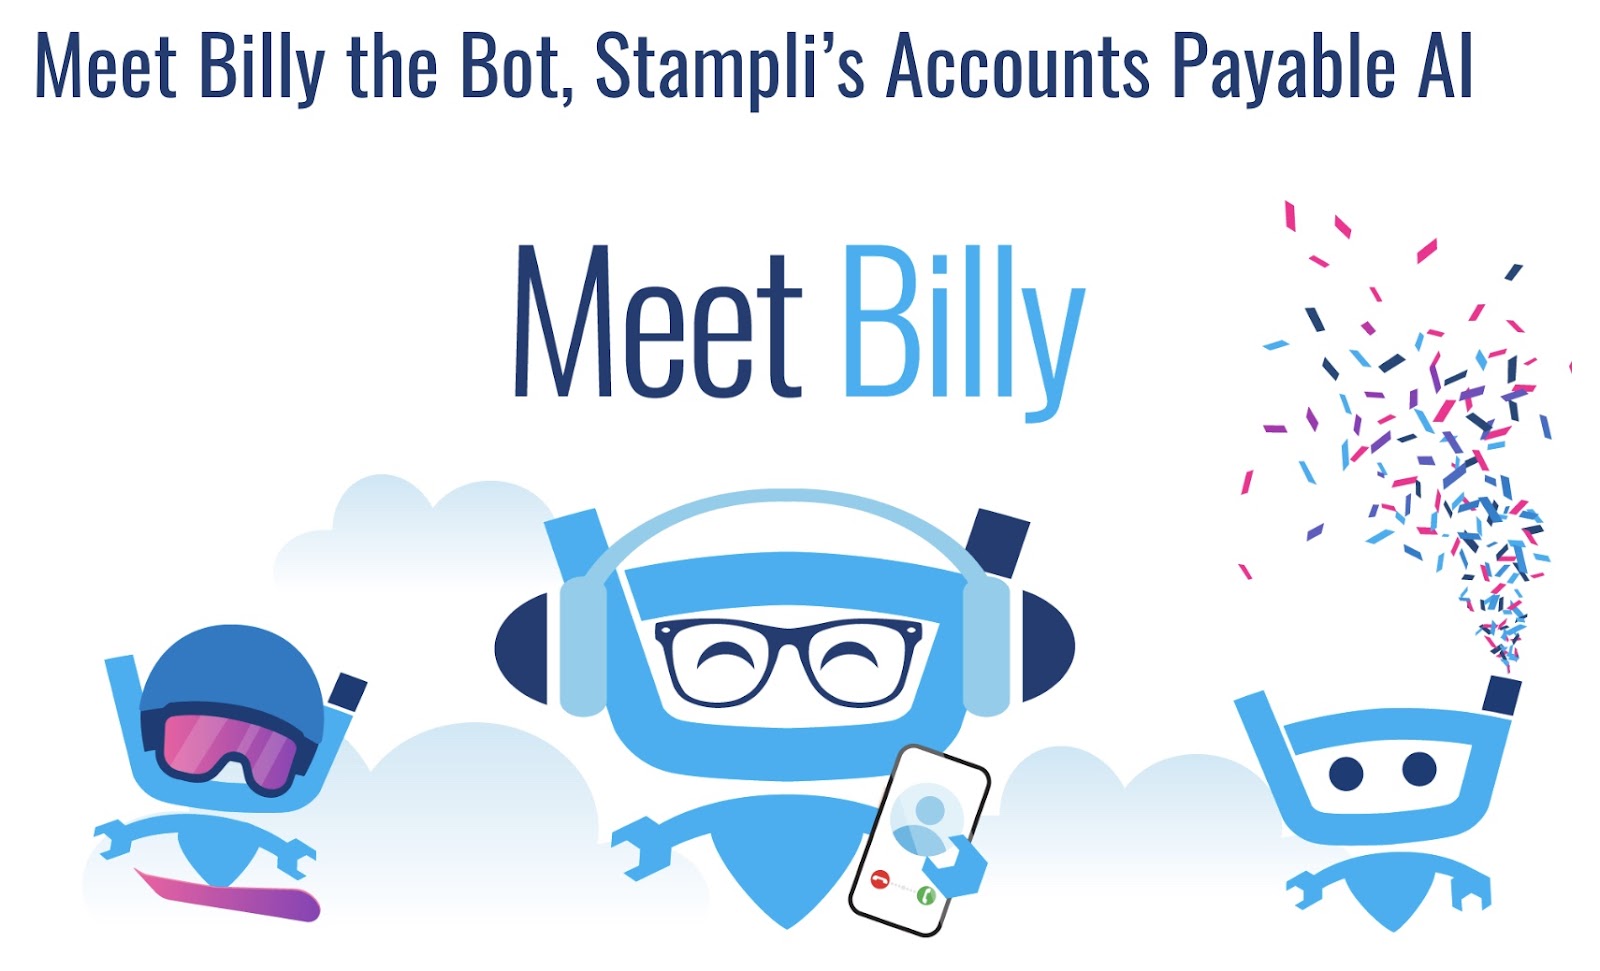 Meet Stampli's Billy the Bot